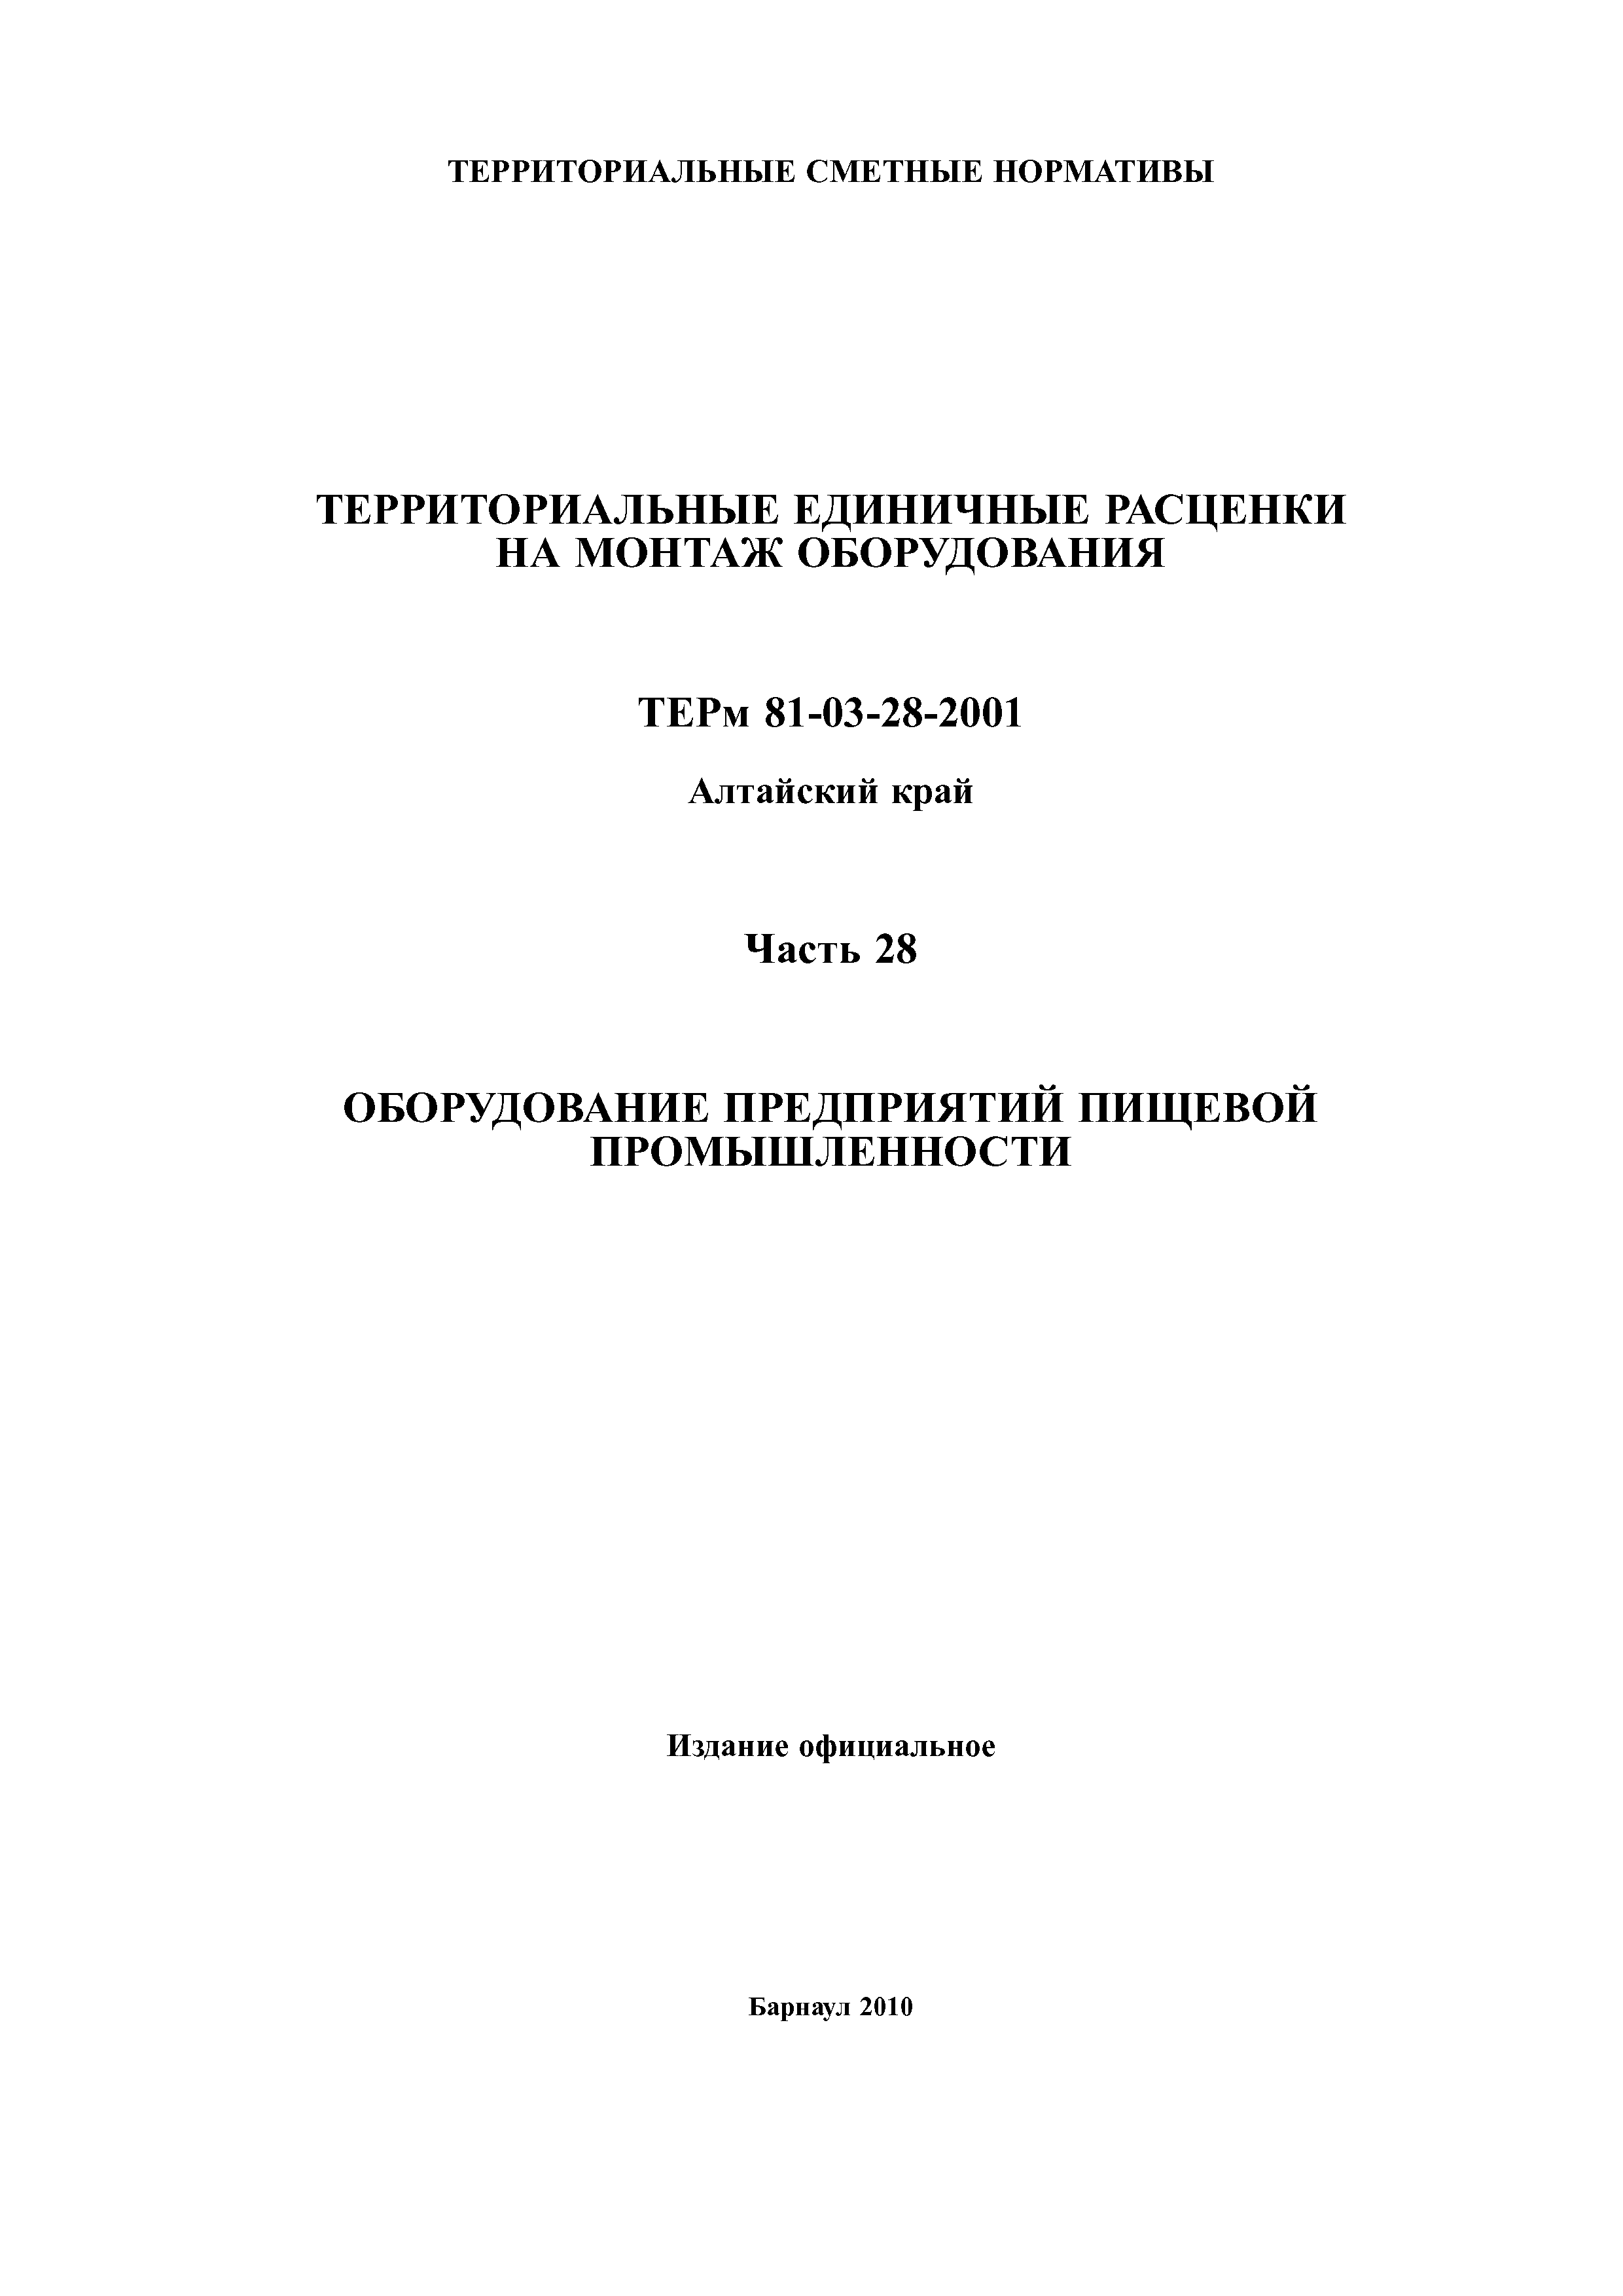 ТЕРм Алтайский край 81-03-28-2001